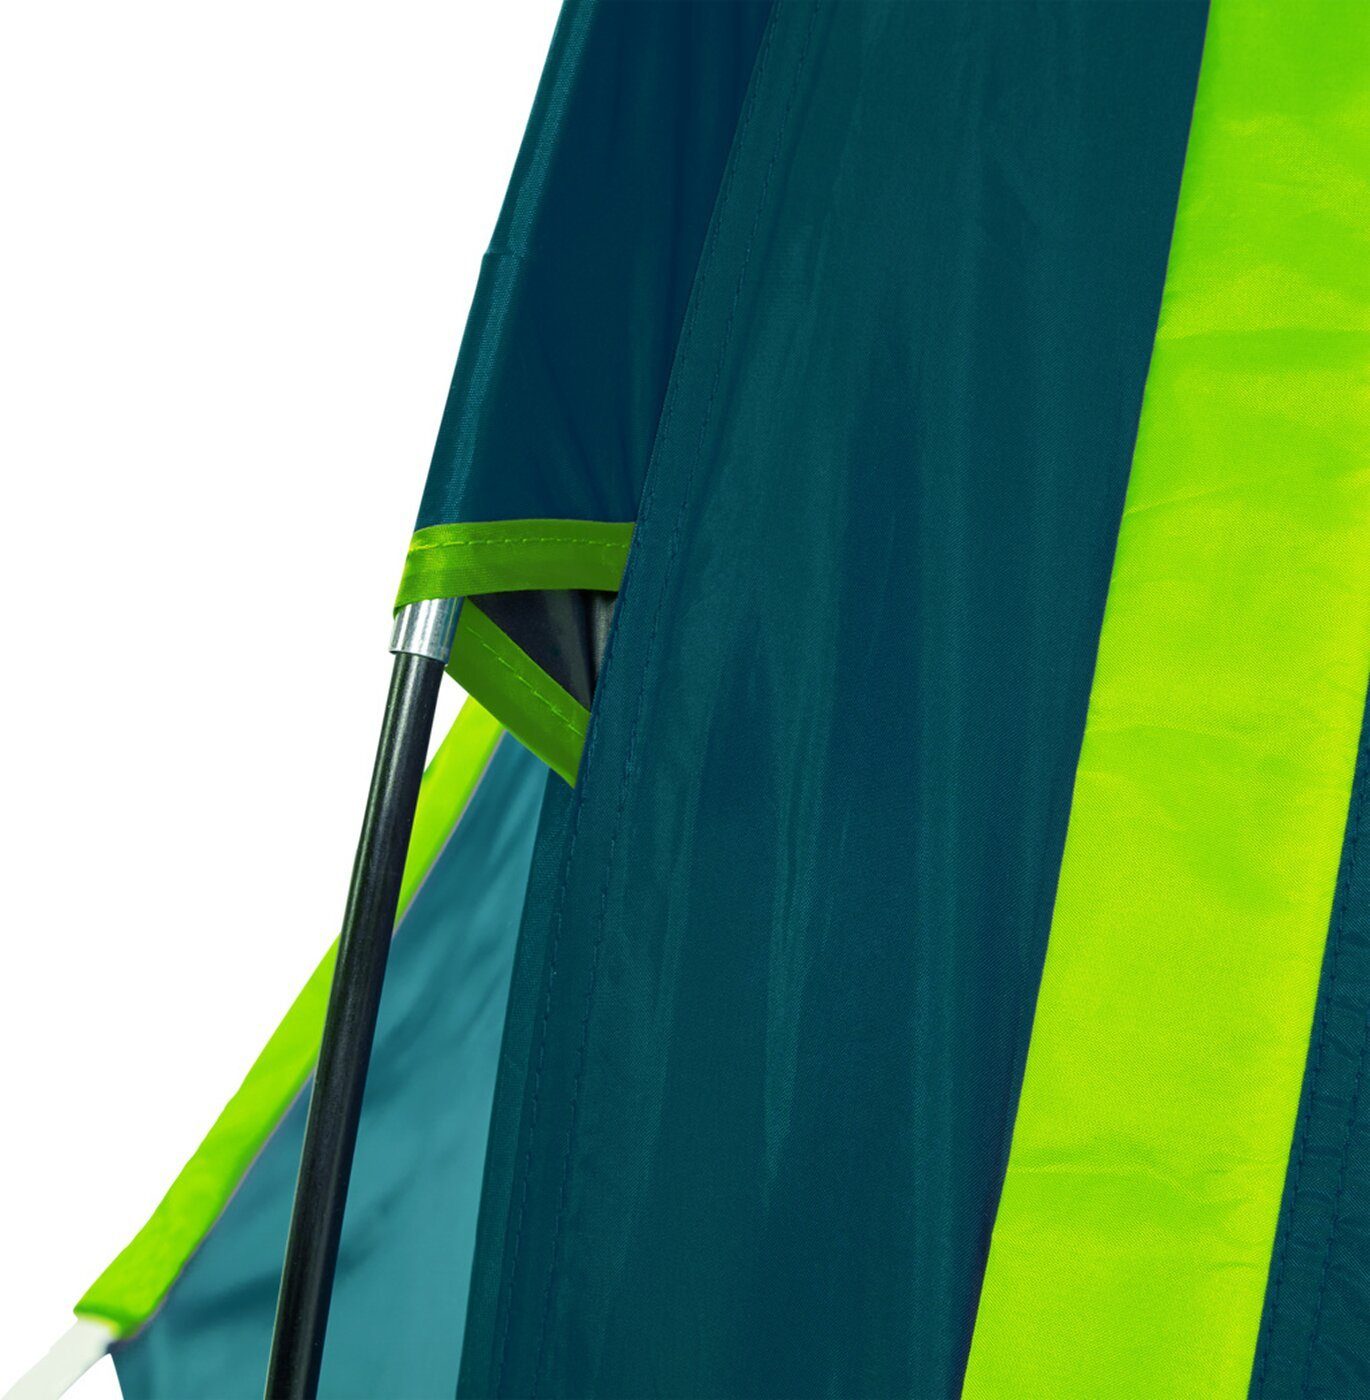 40.3 Camping-Zelt McKINLEY SW PETROL/GREEN Gruppenzelt VEGA LI BLUE